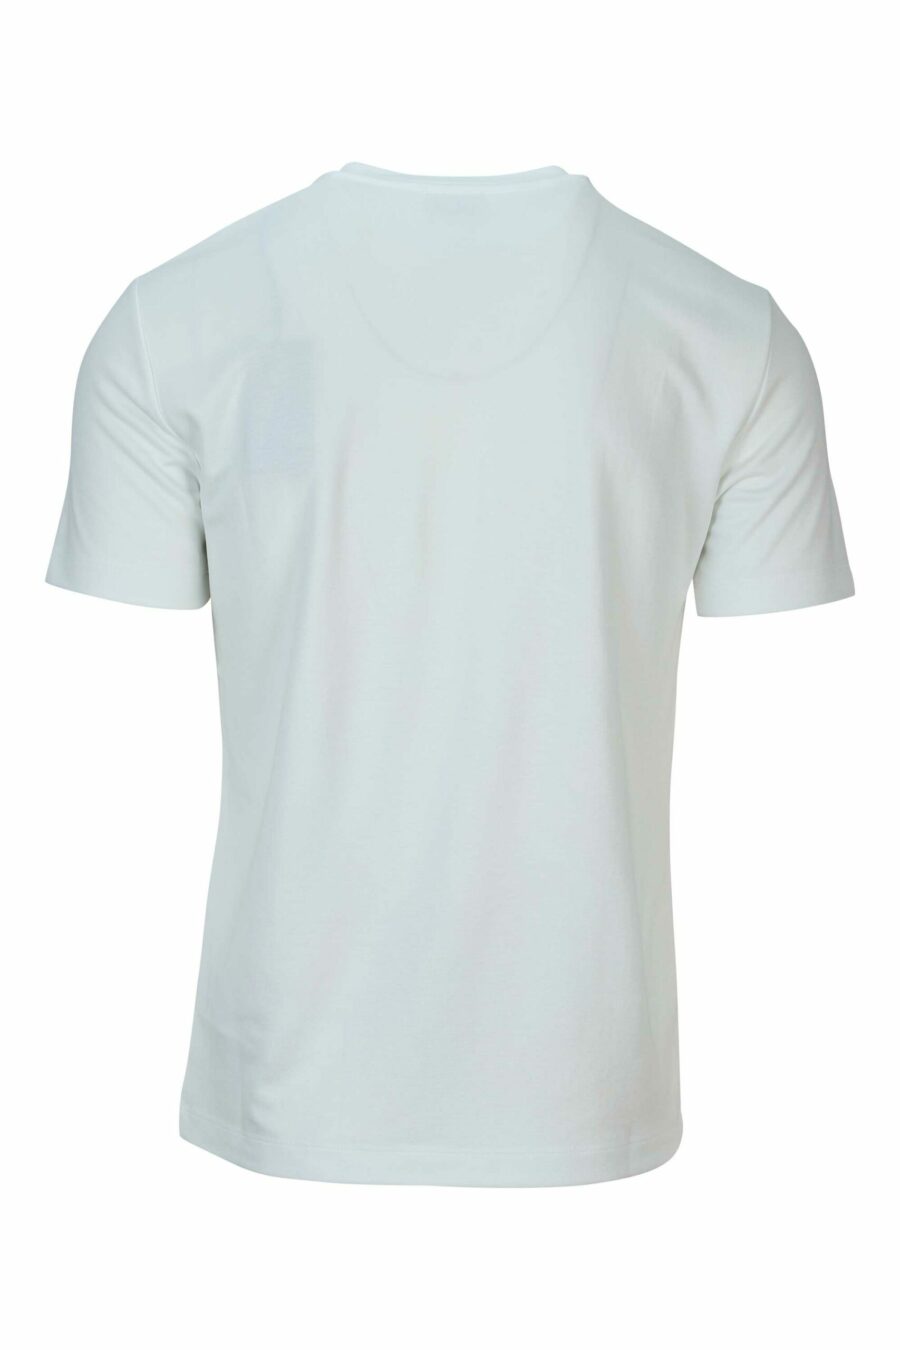 White oversize T-shirt with white "lux identity" mini-logo on black plate - 8058947508495 1 scaled